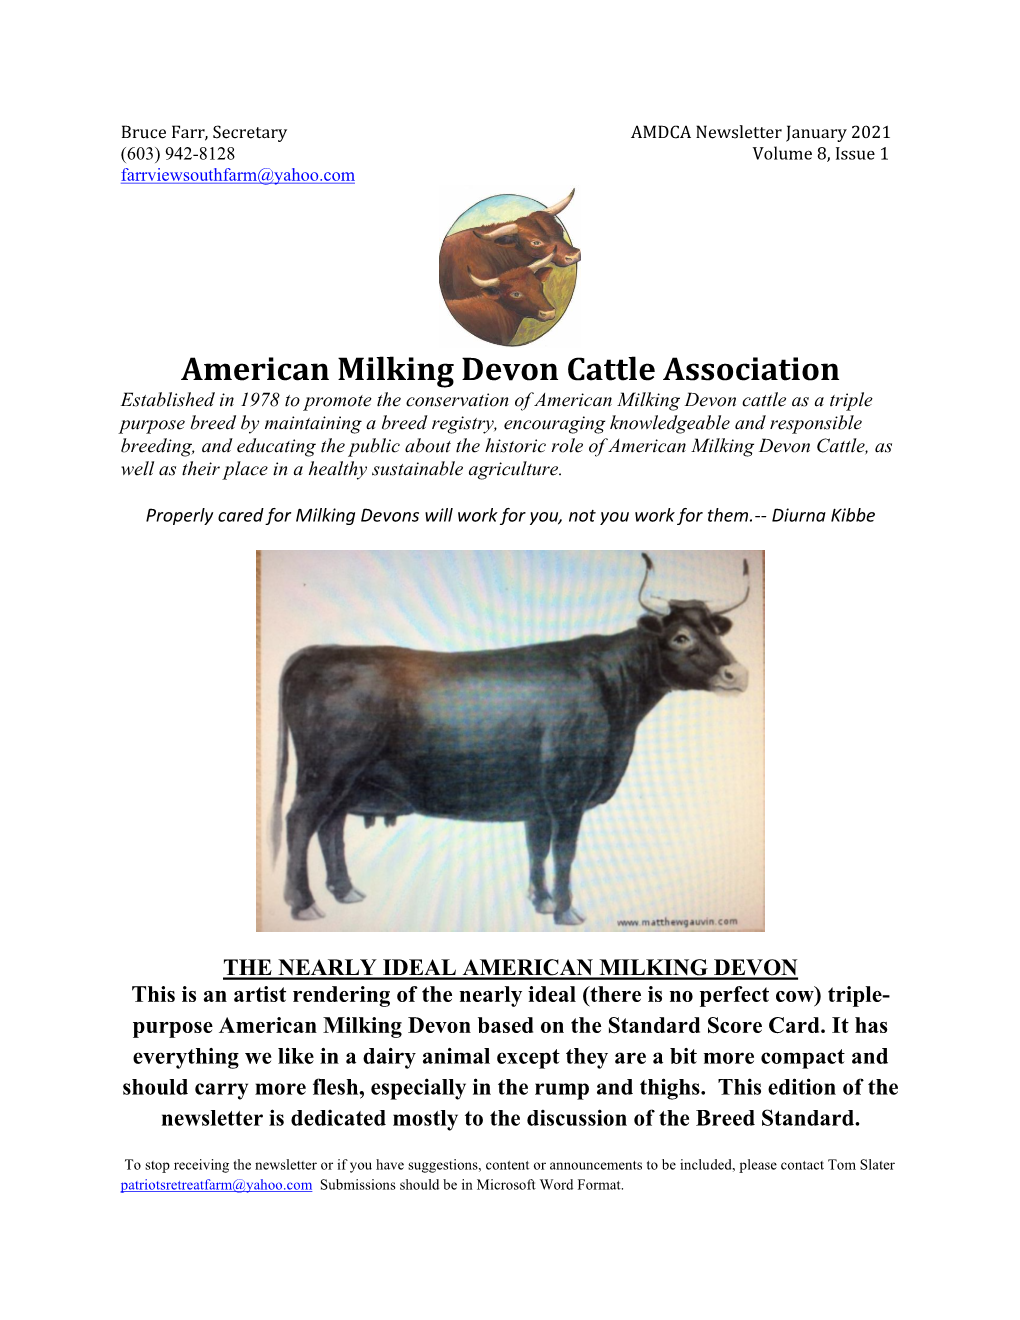 American Milking Devon Cattle Association